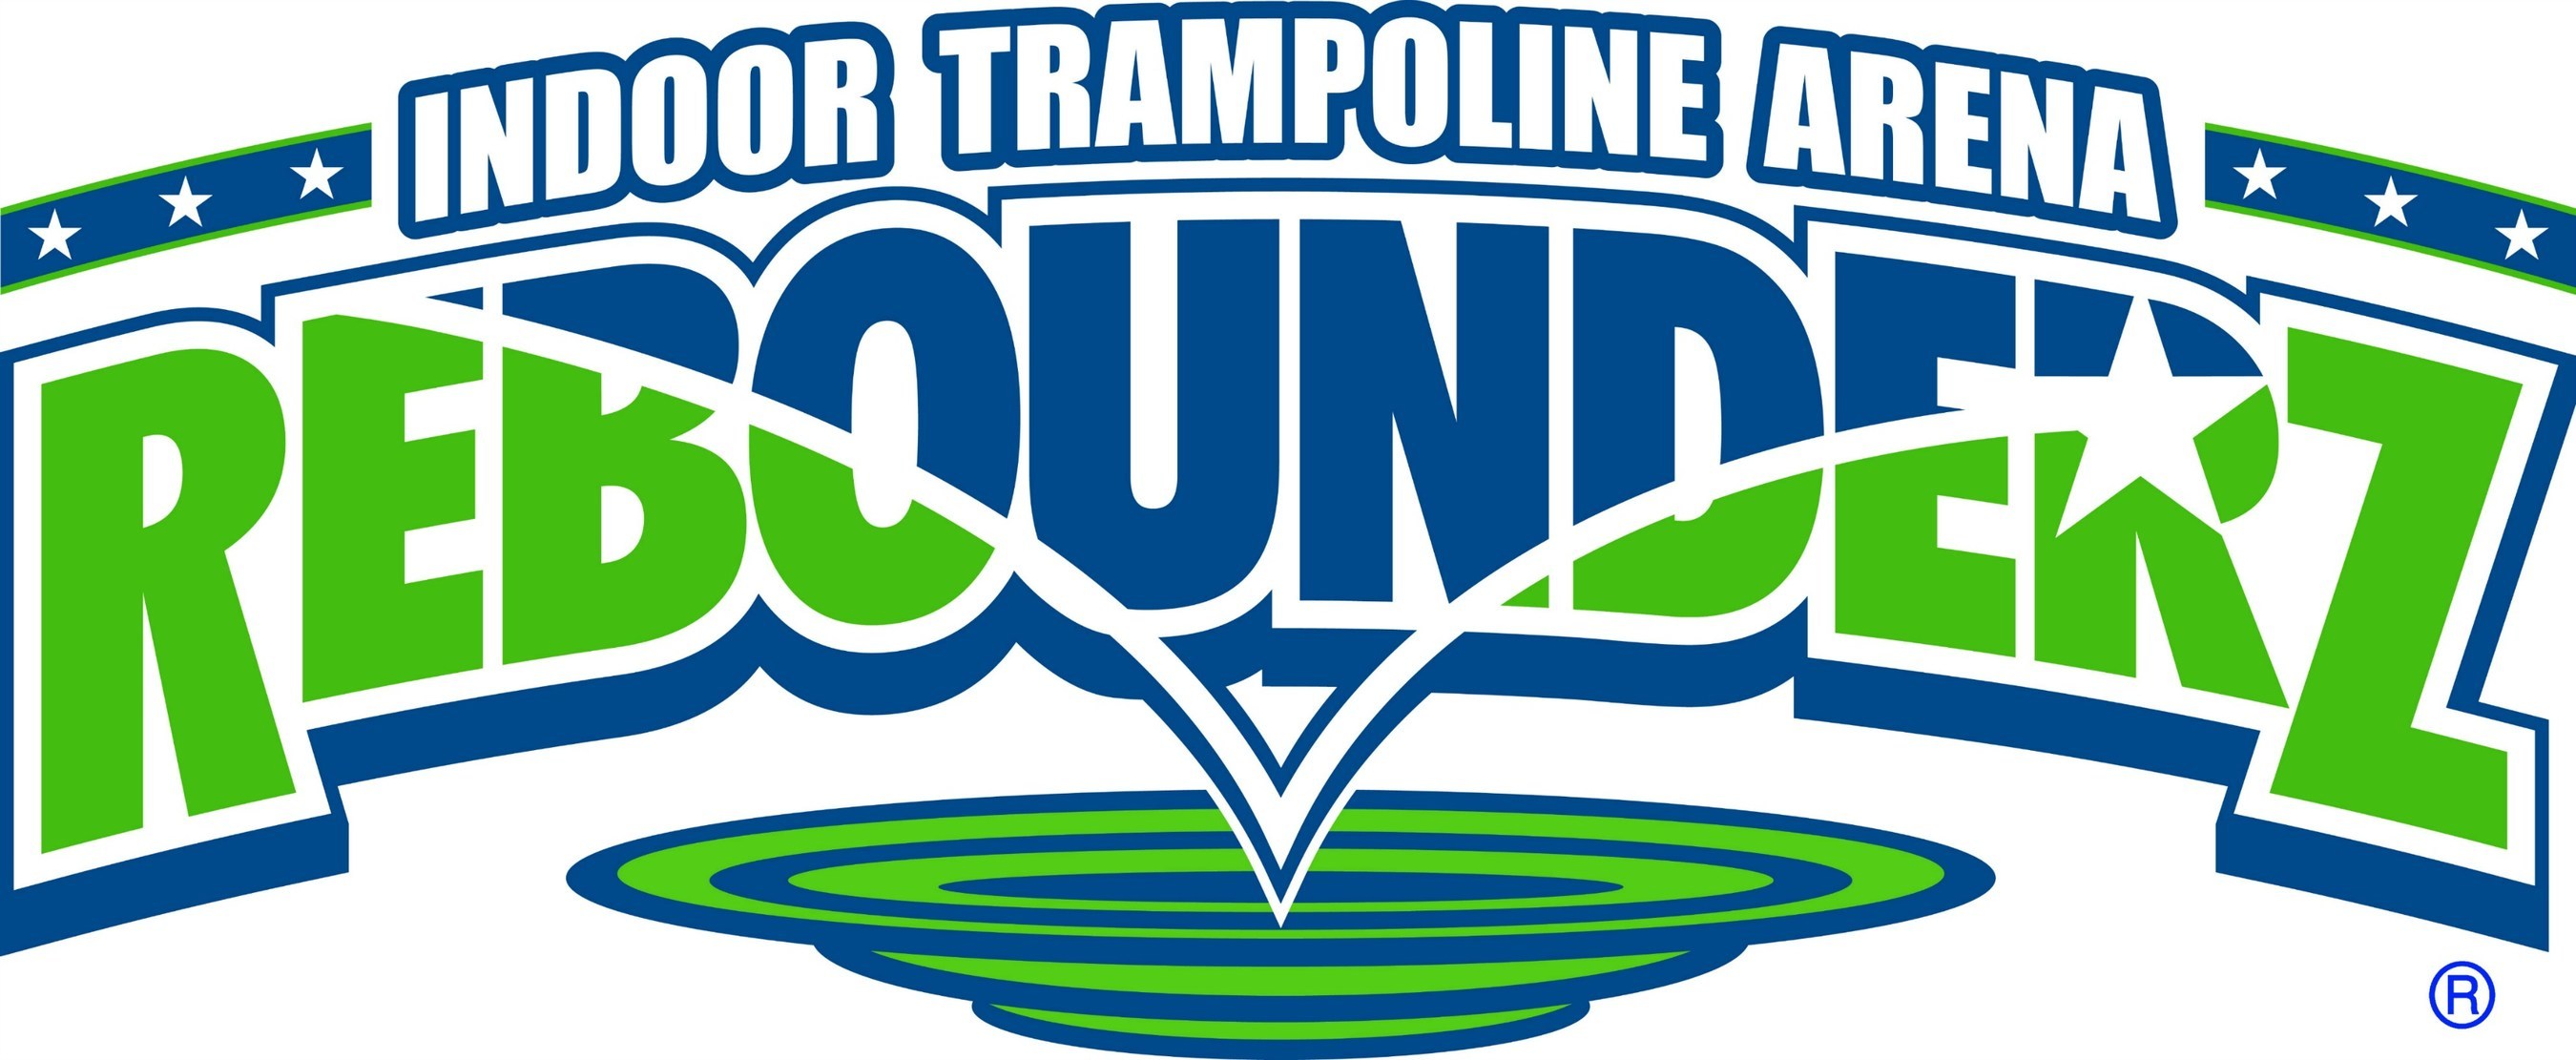 Rebounderz Indoor Trampoline Arena Jumps into the South Florida Market2700 x 1111